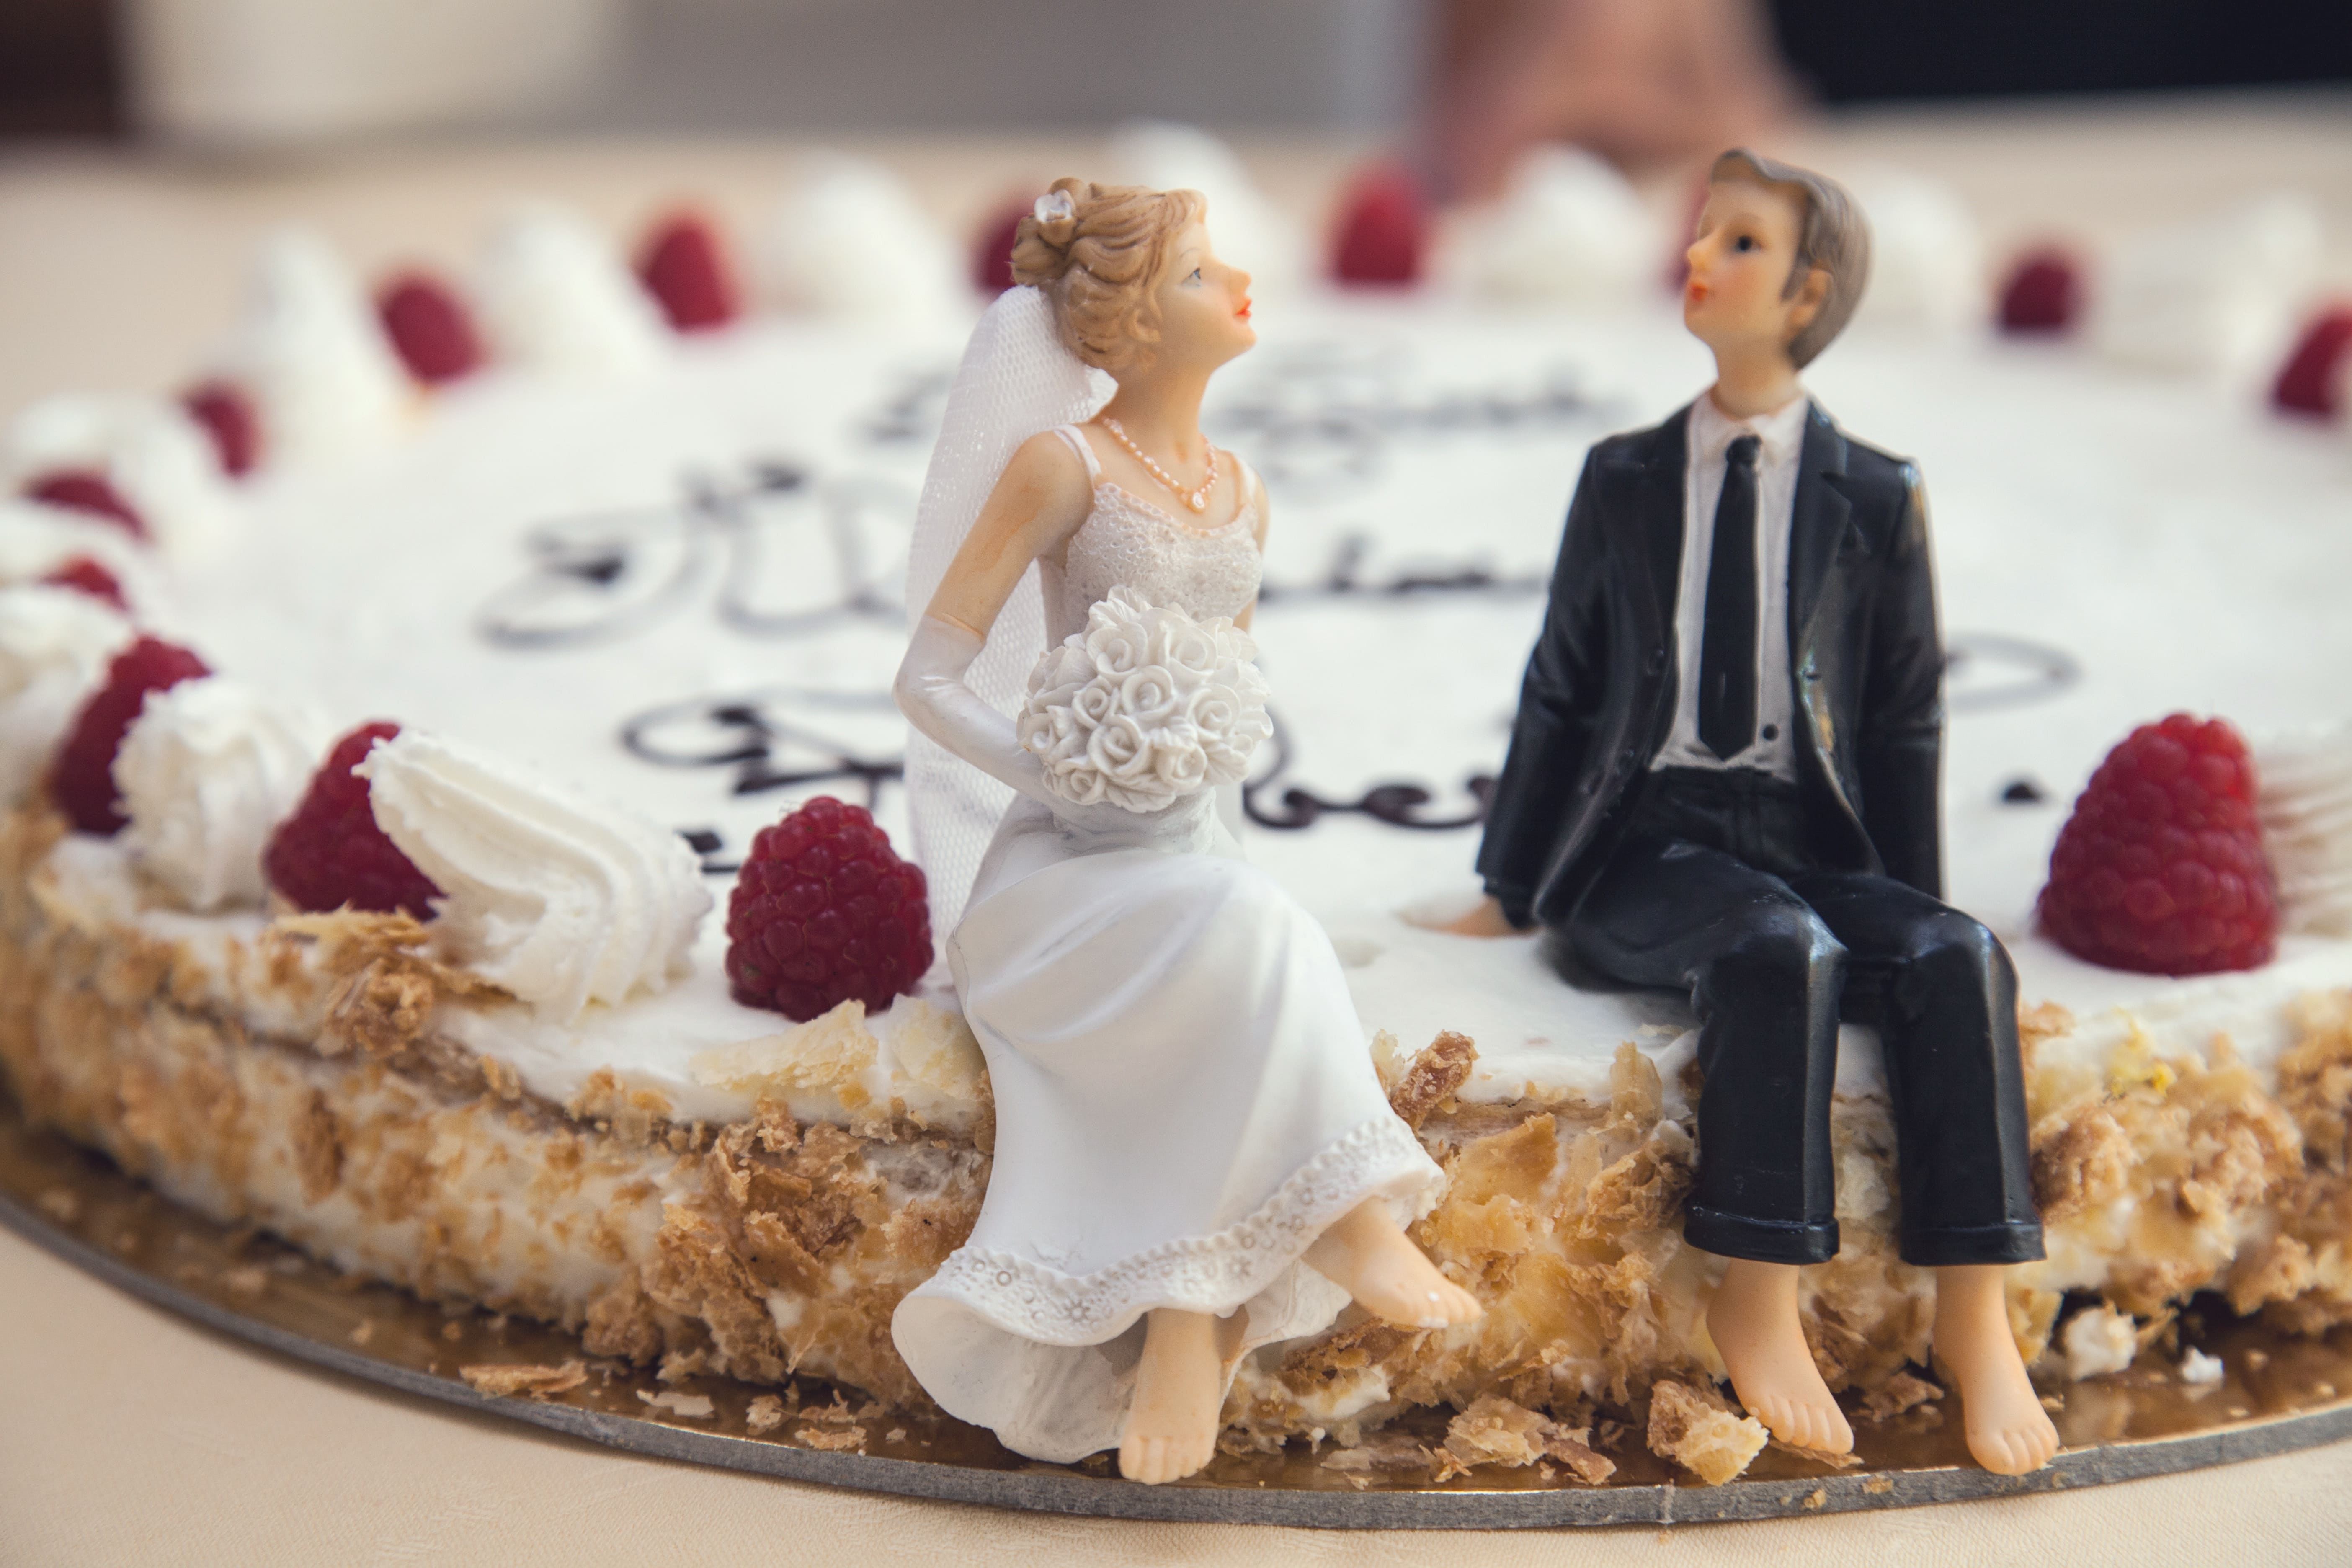 Romantic Cake Husband And Wife White Creem.